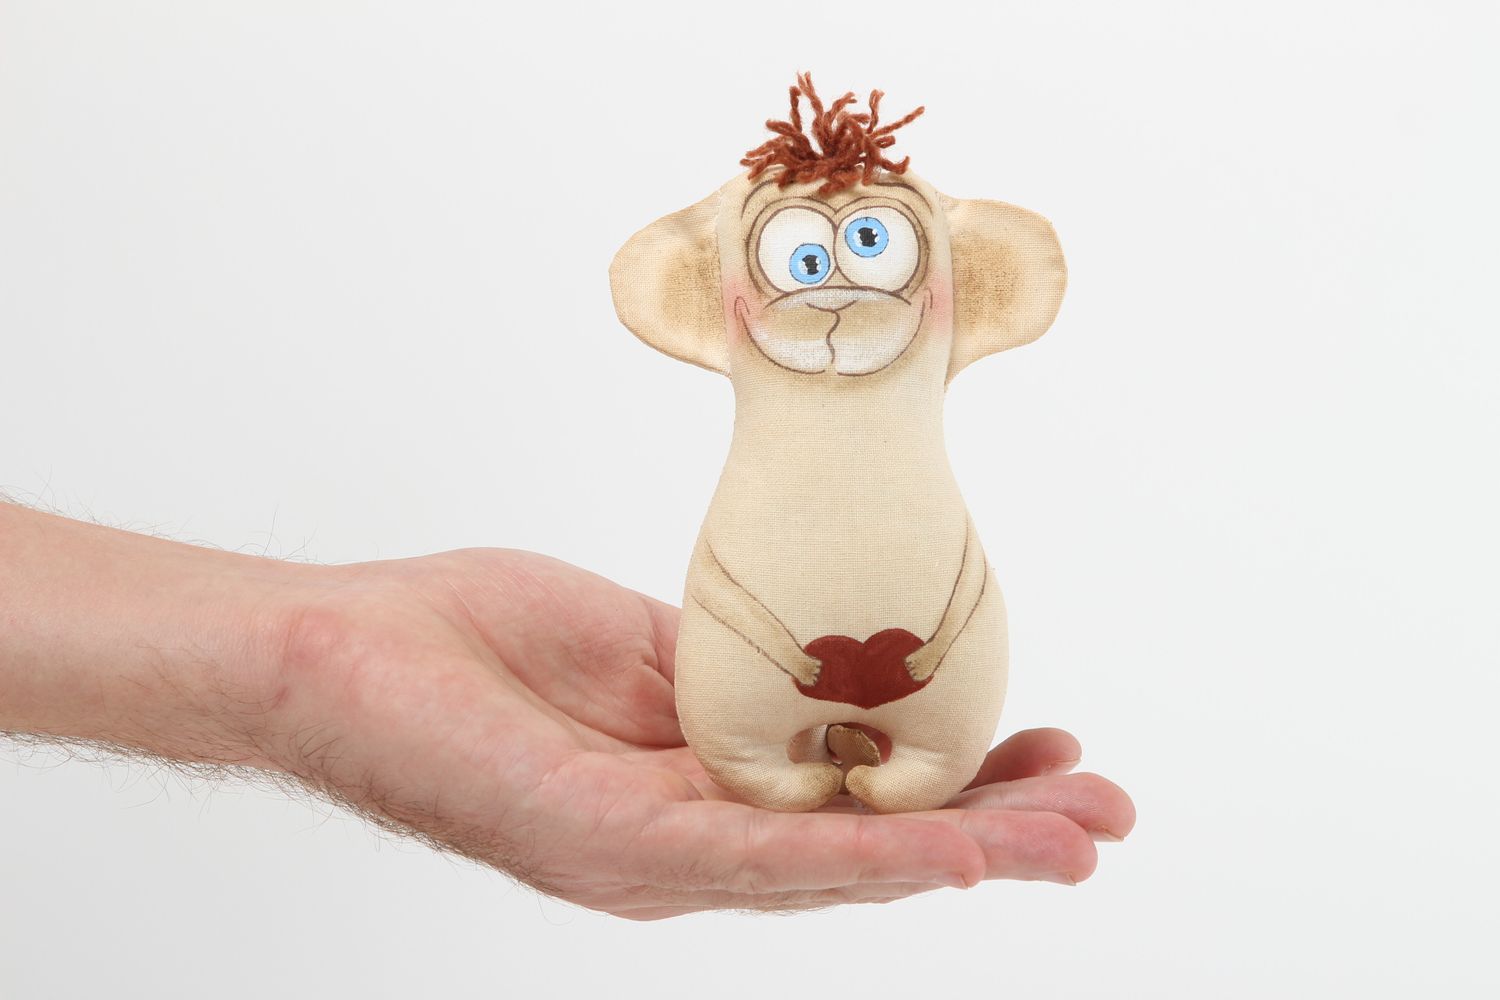 Handmade toy designer toy for nursery decor unusual gift for baby decor ideas photo 5